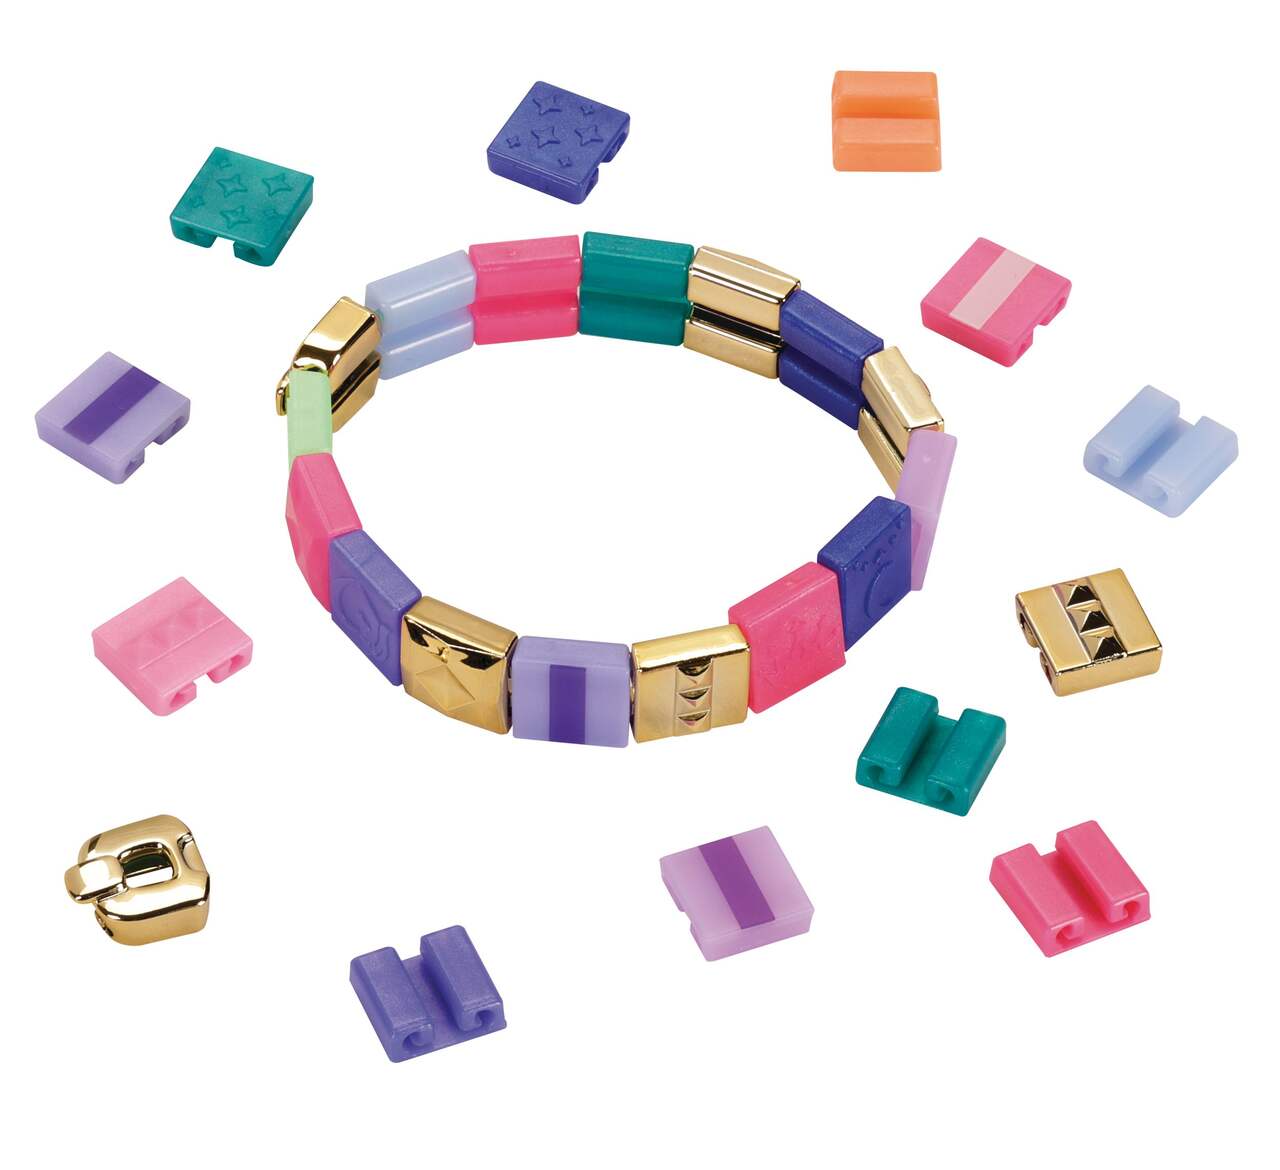 ad] Pop Style Bracelet Maker! . Check out this tile bracelet maker, s